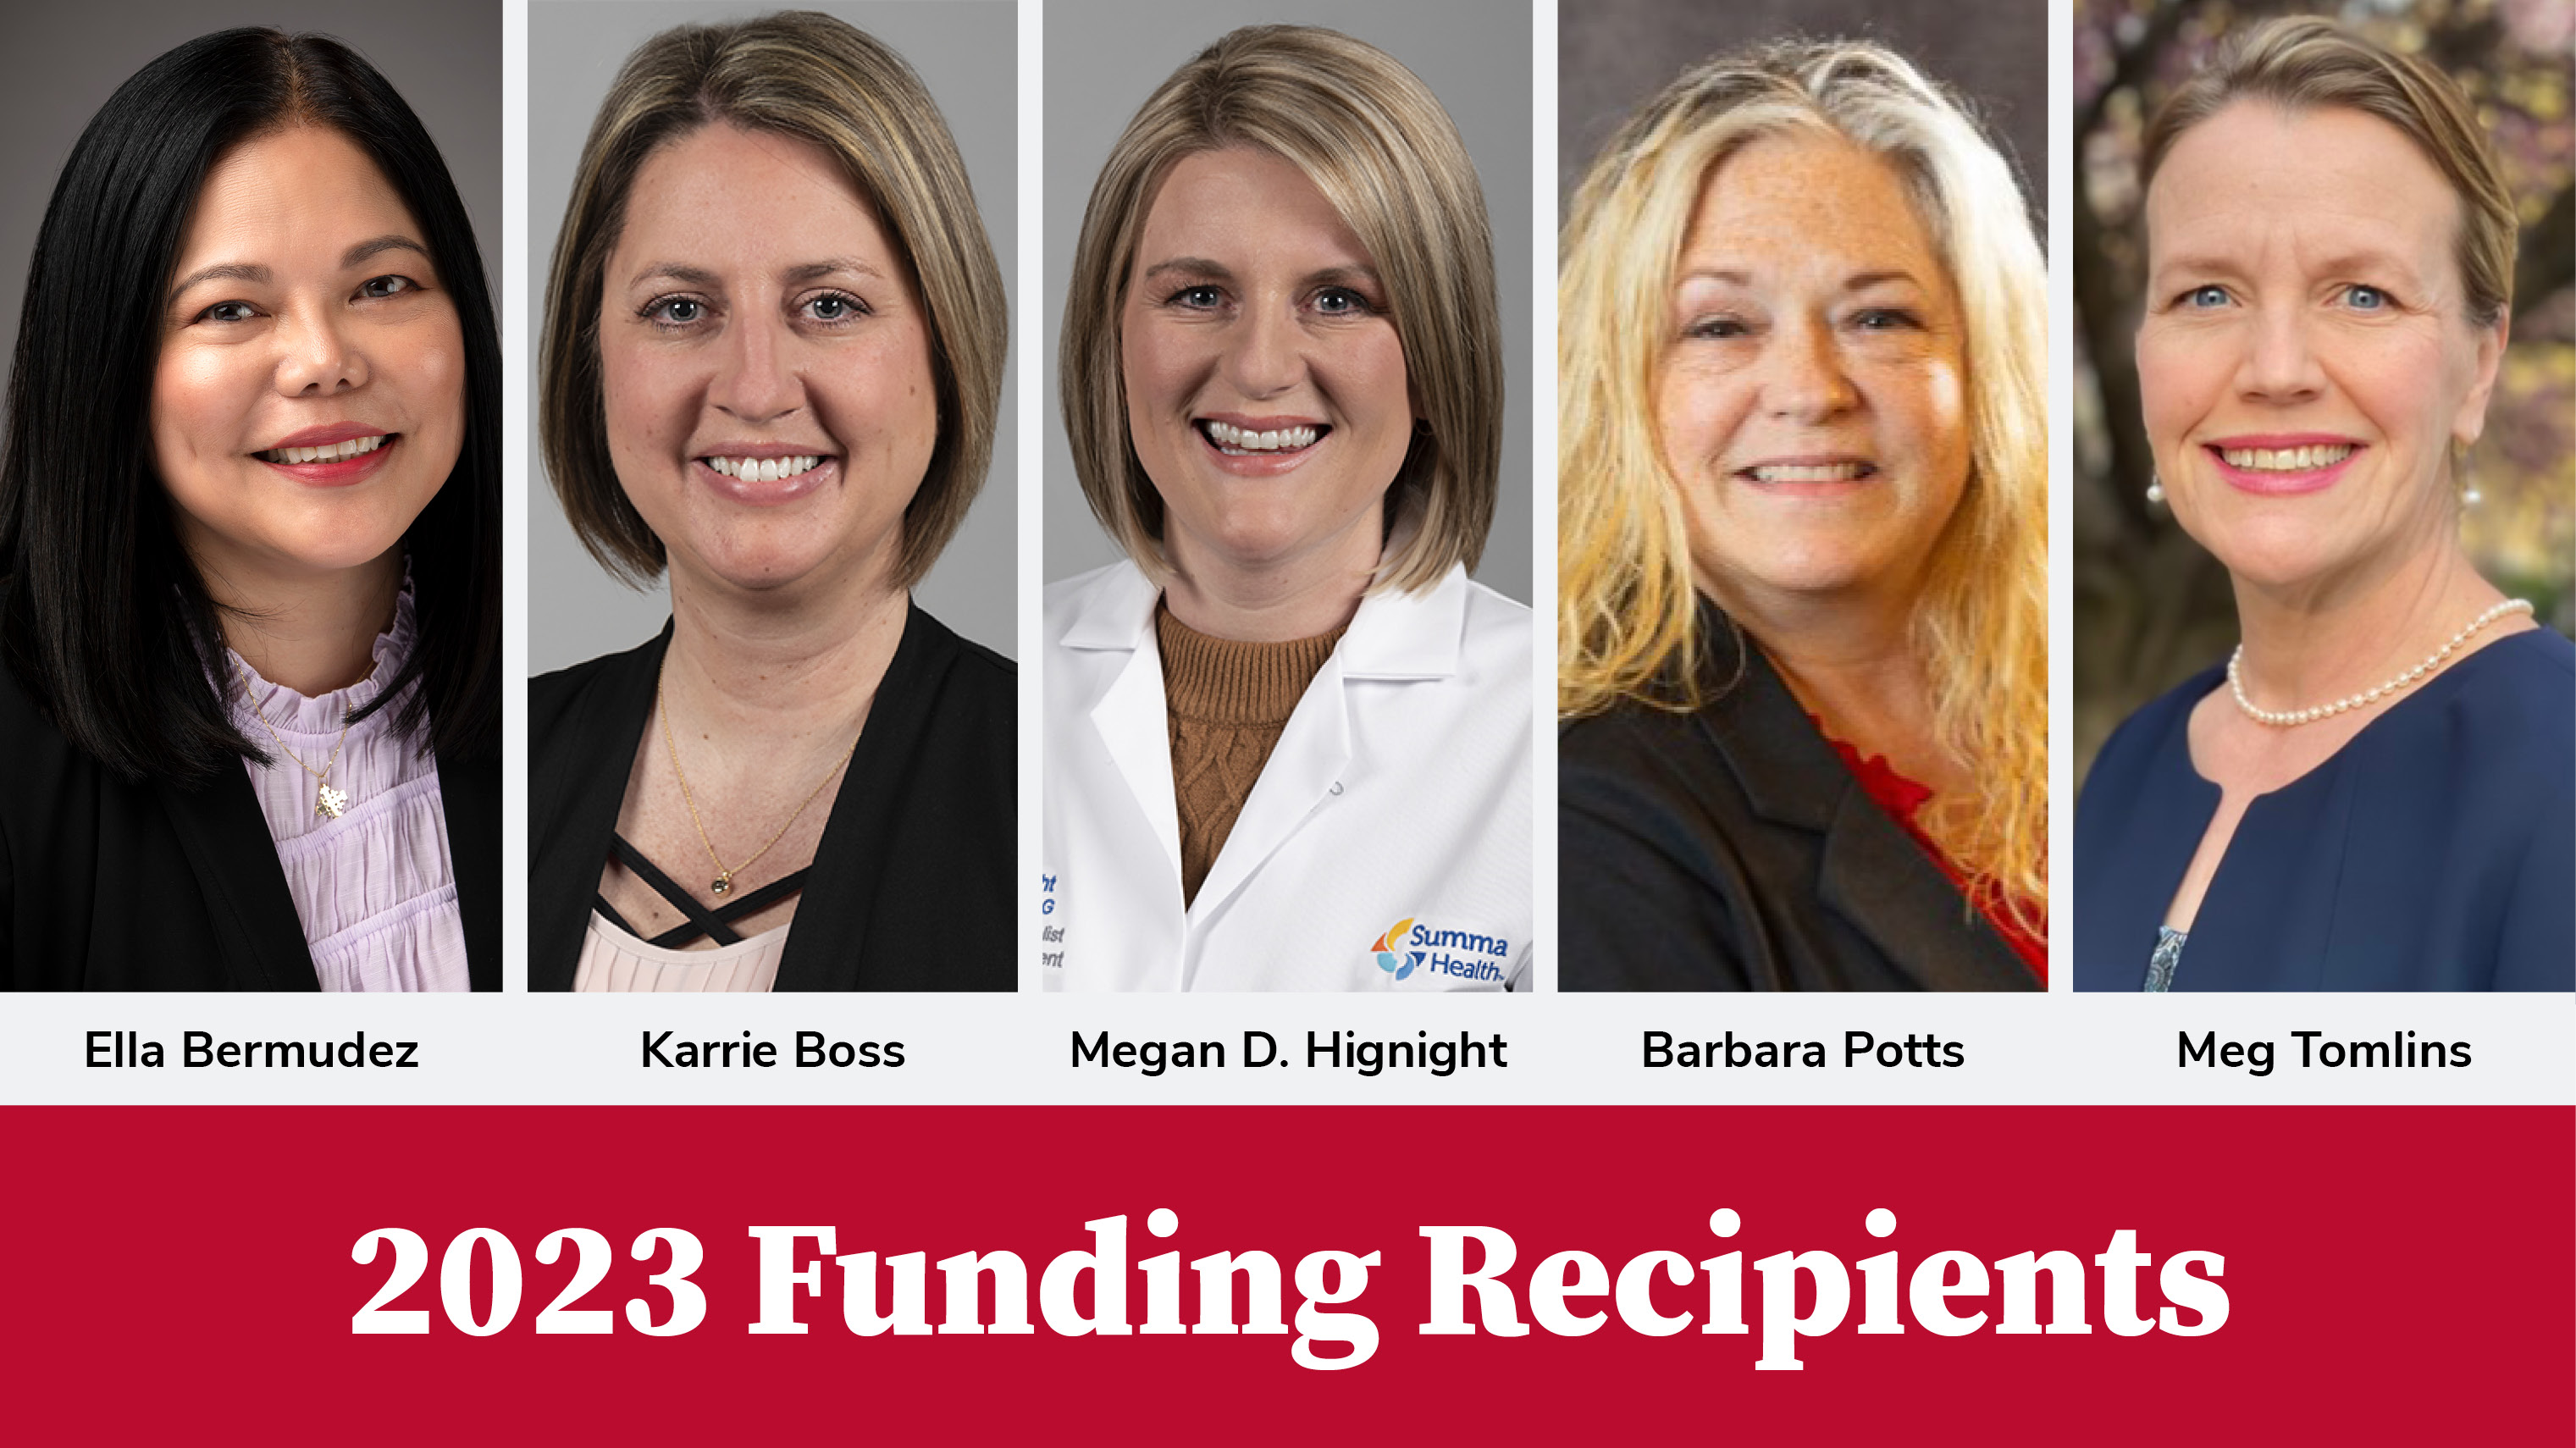 Fuld Funding 2023 Recipients